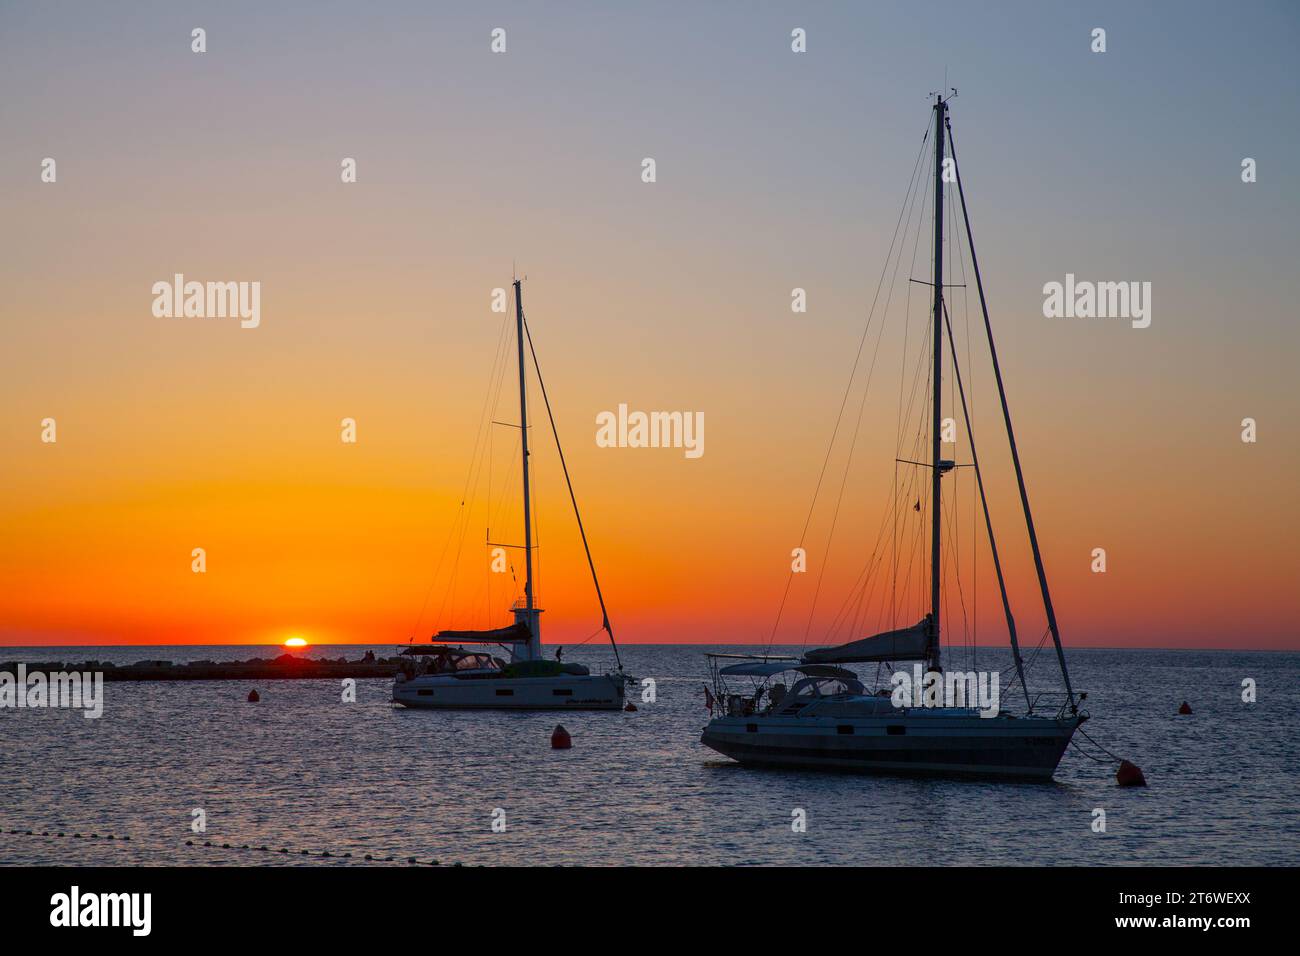 Sunset, Anchored Sailboats, Old Town, Novigrad, Croatia Stock Photo